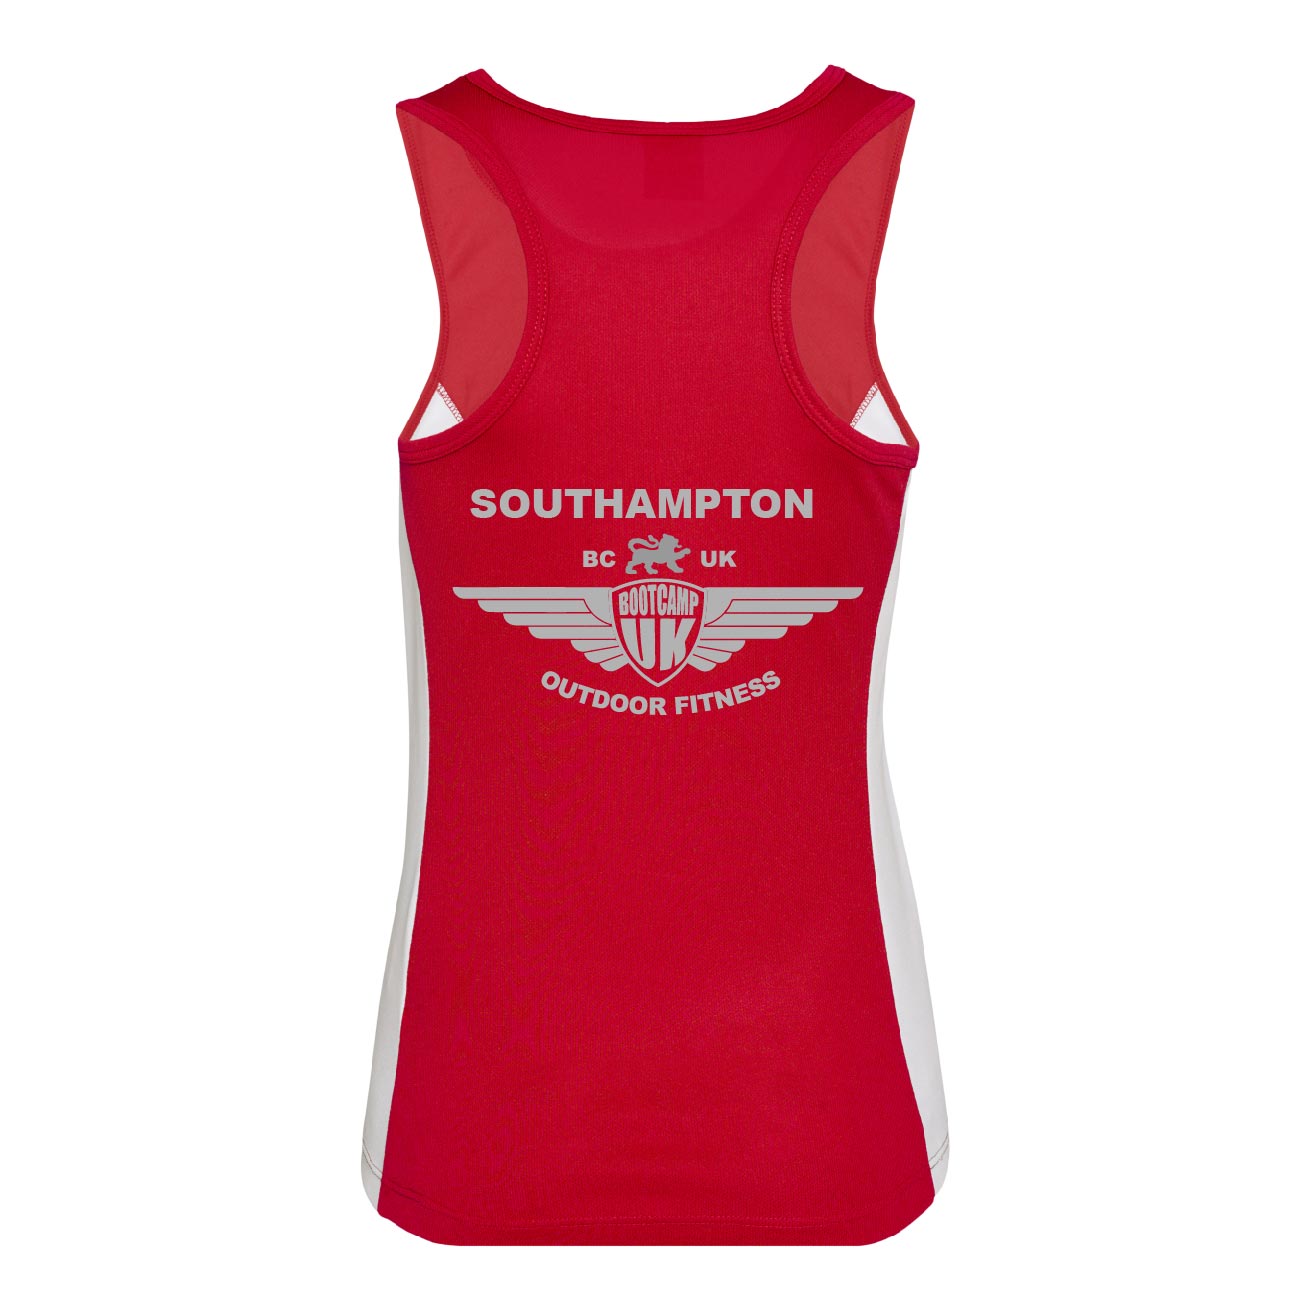 Southampton Ladies Vest